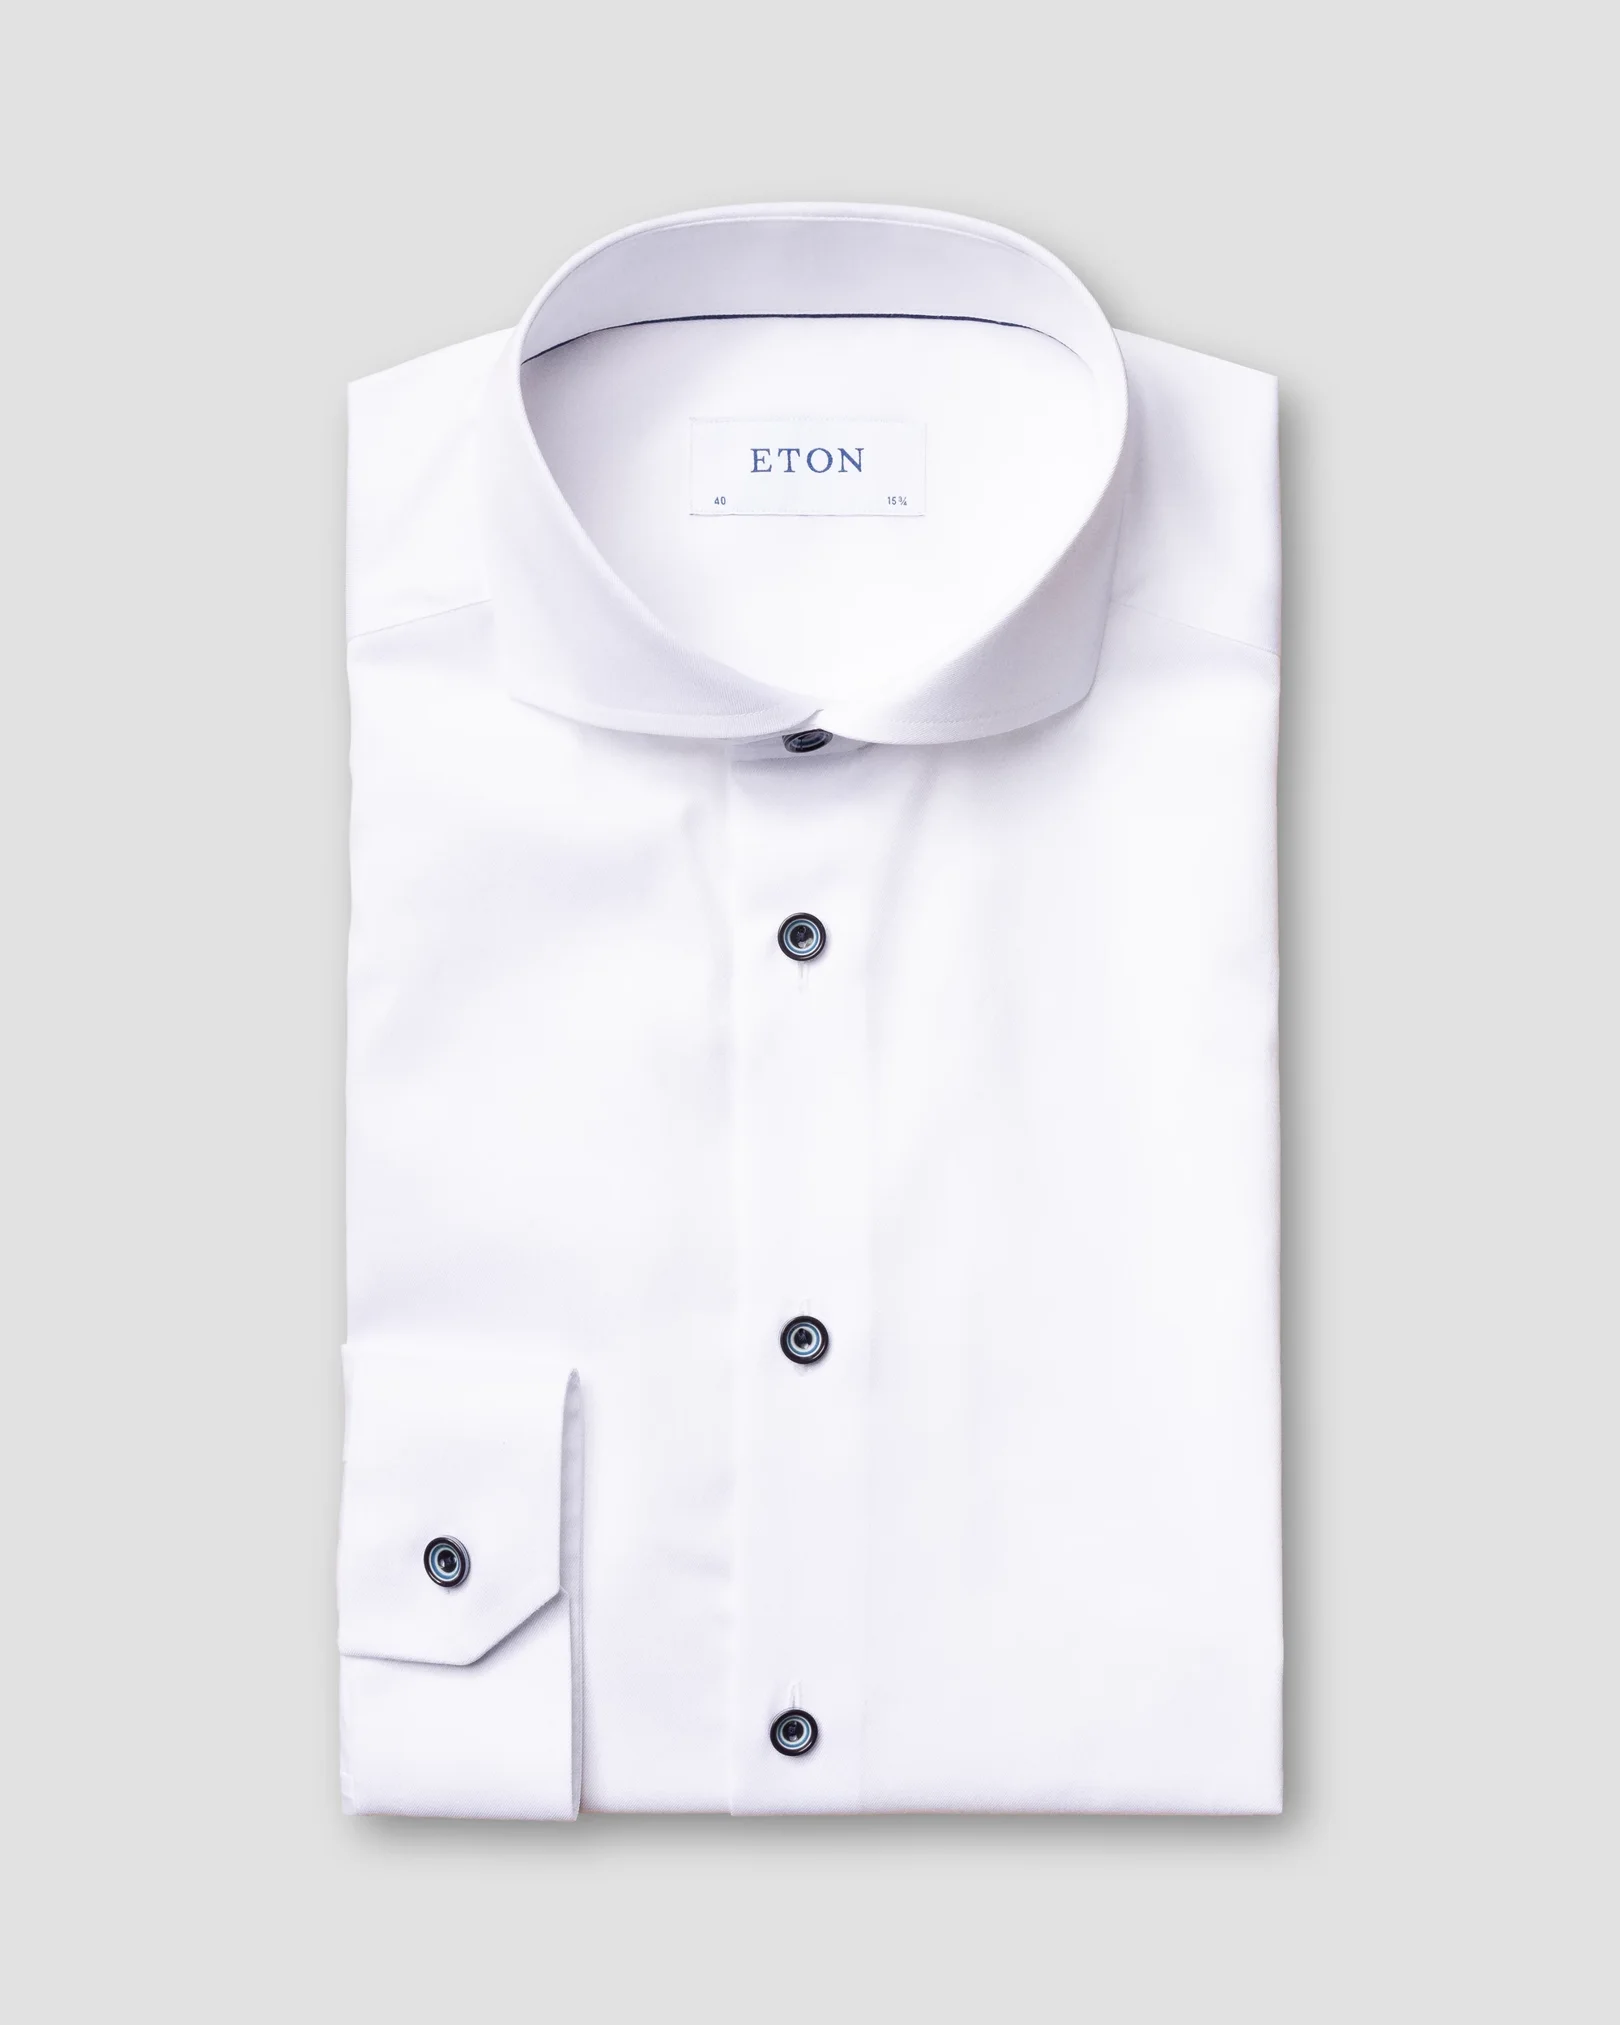 Eton - white twill shirt navy buttons extreme cut away